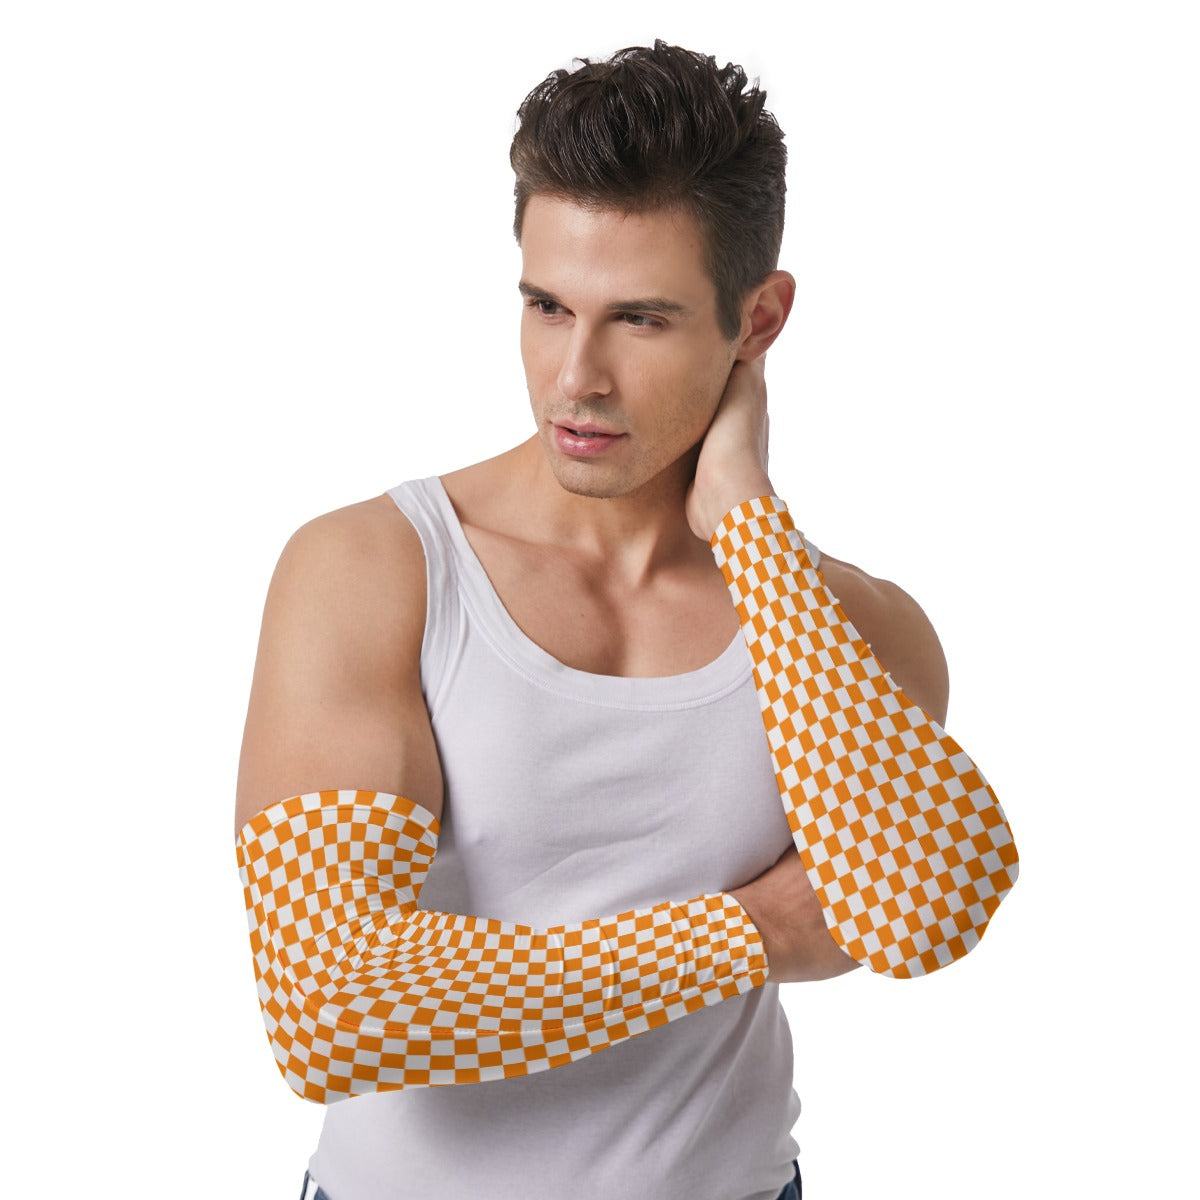 Checkerboard Unisex Sunscreen Arm sleeve